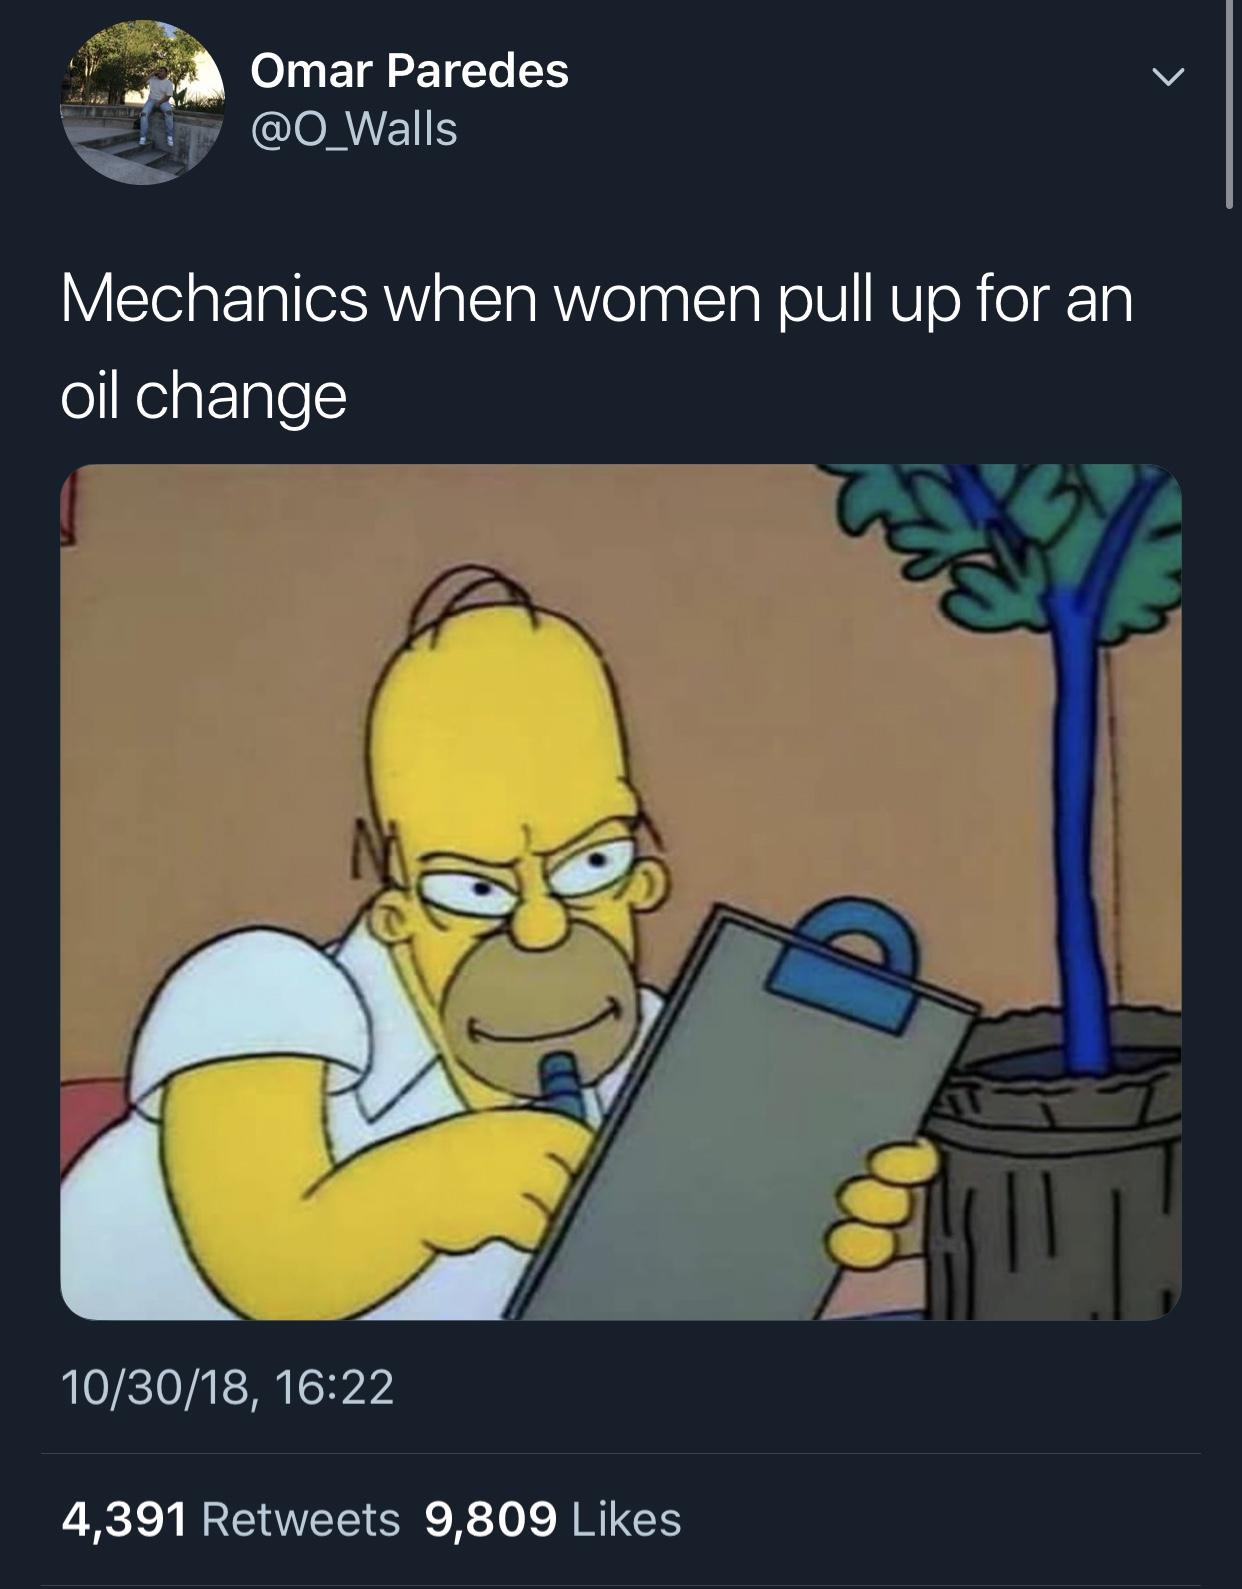 dank meme - it's mam - Omar Paredes Mechanics when women pull up for an oil change 103018, 4,391 9,809